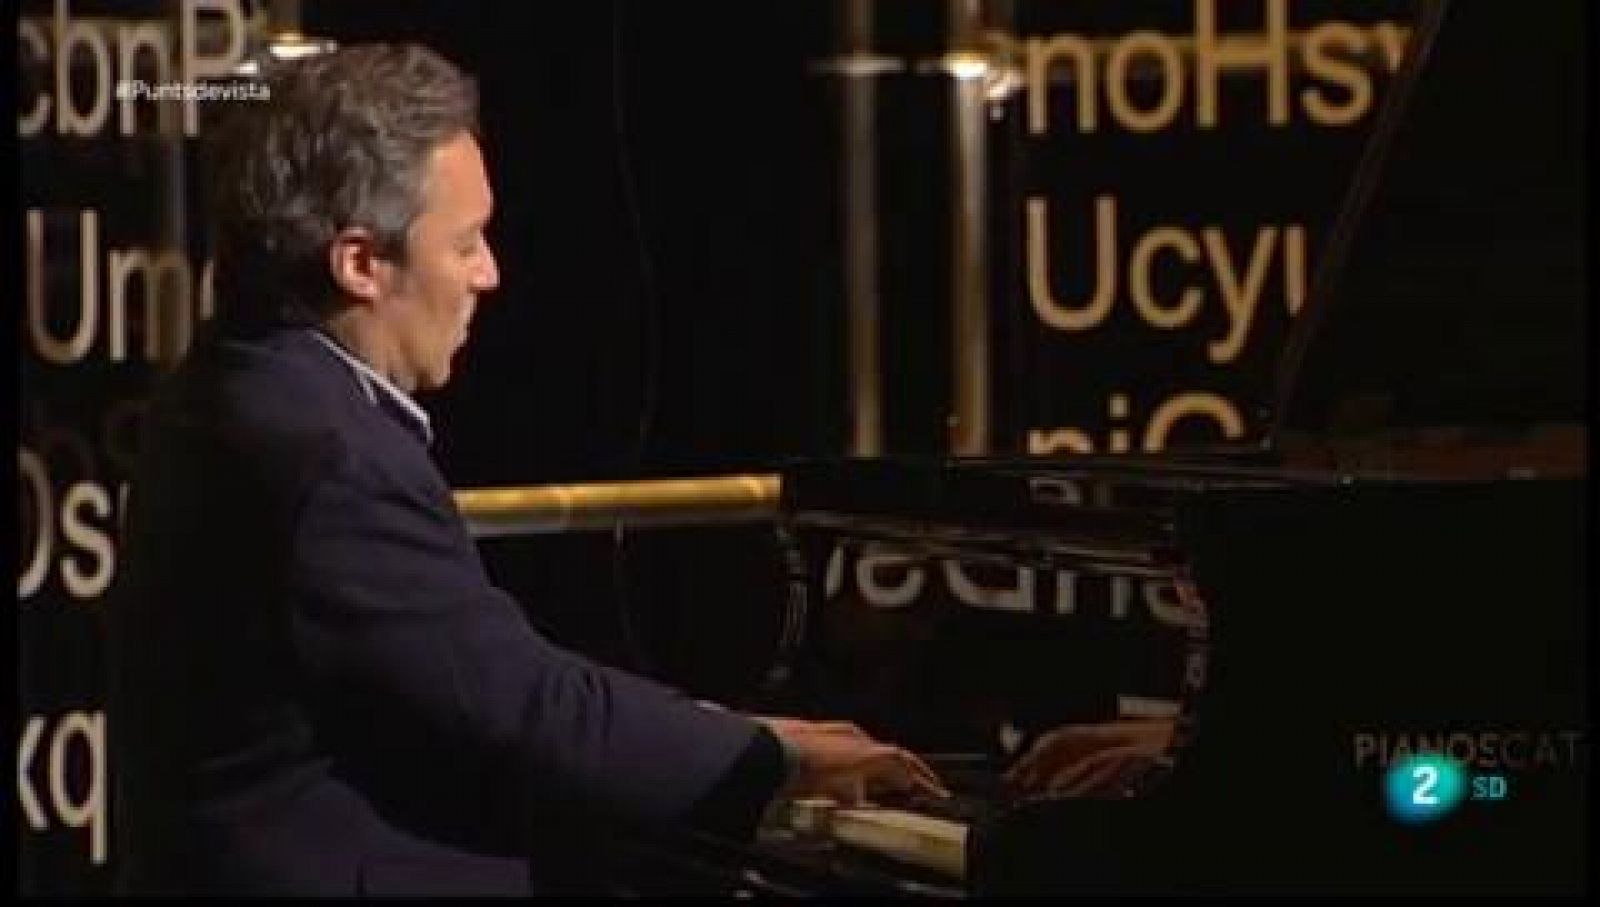  Pianista Daniel Ligorio | Punts de vista - RTVE Catalunya